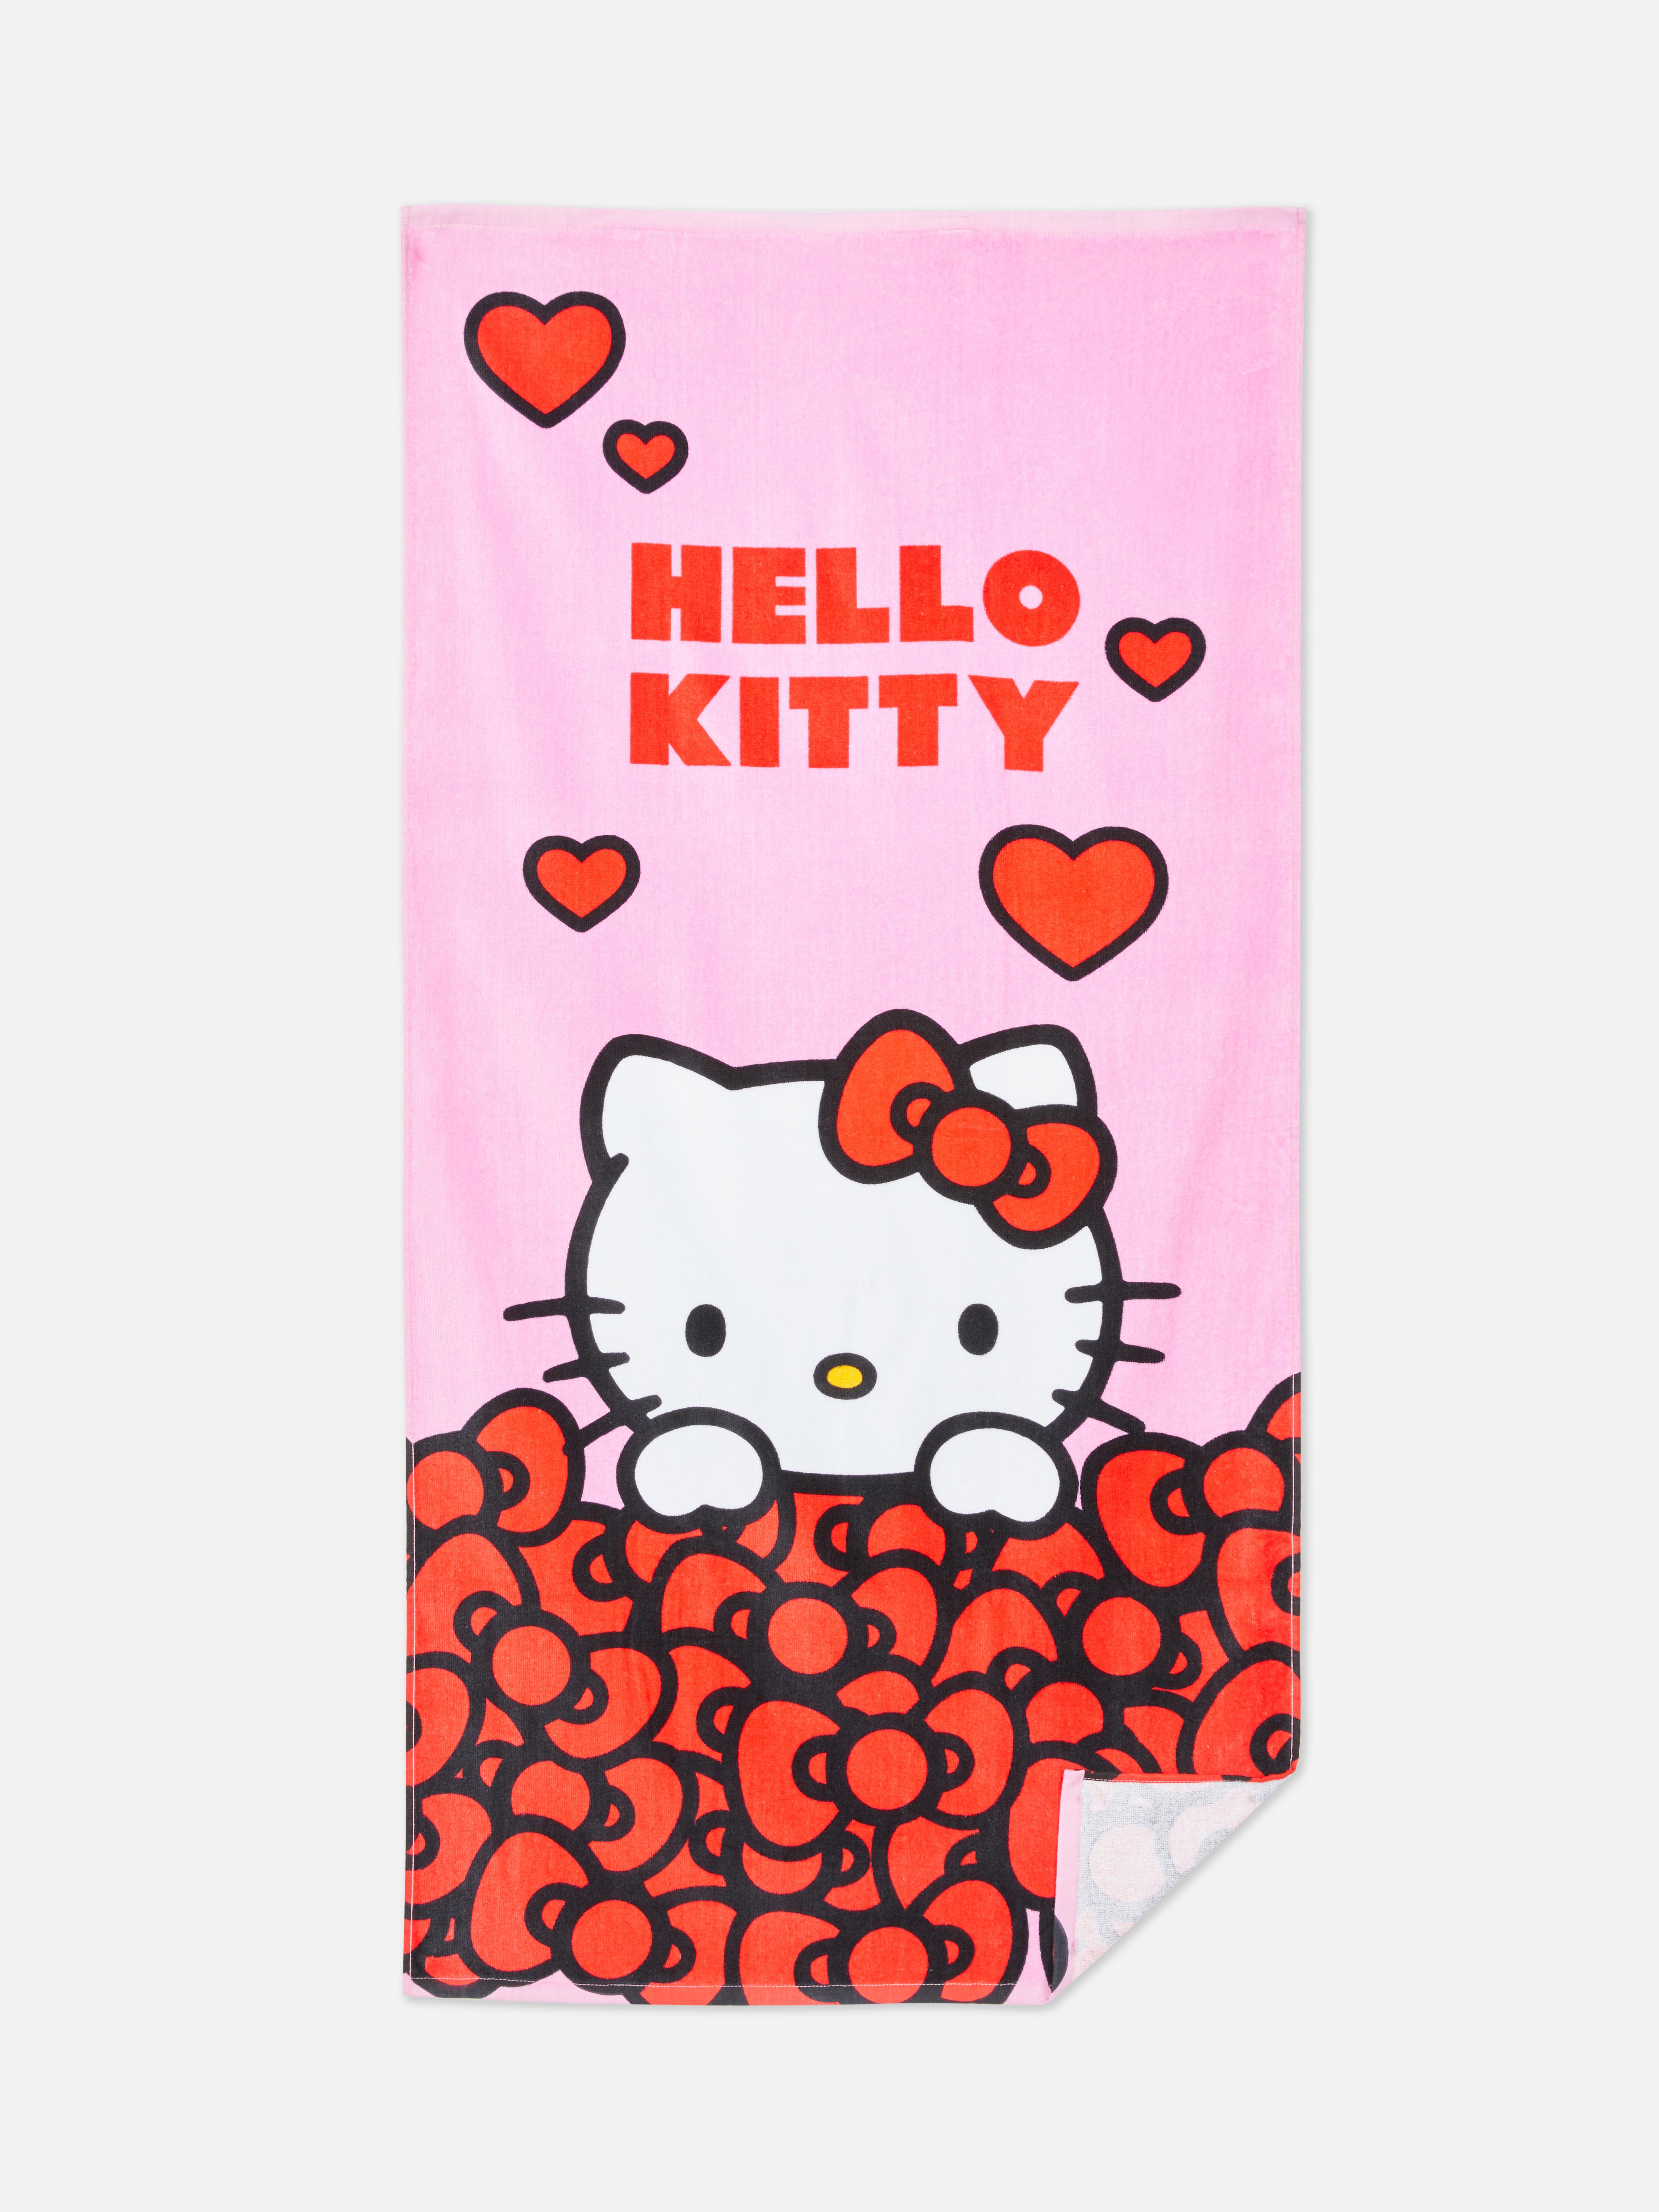 Prosop Aniversarea a 50 de ani de Hello Kitty